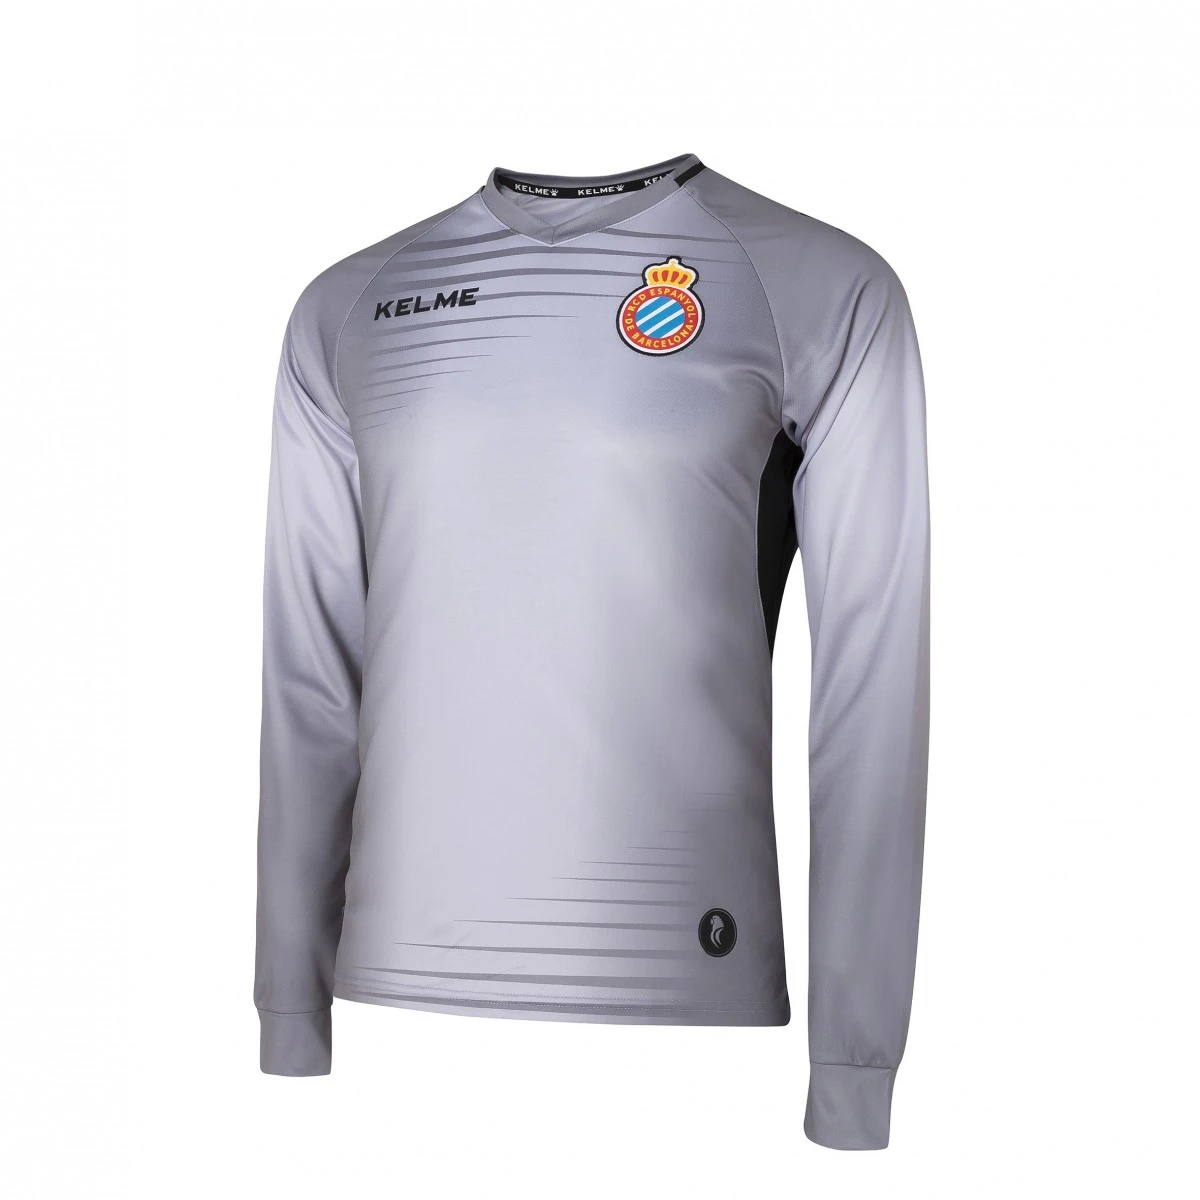 Kelme Tienda Oficial Camiseta Portero 18/19 R.c.d Espanyol Camiseta Manga Corta Fabricada En 100% Poliester 94288 19 Oto|Camisetas de fútbol| - AliExpress